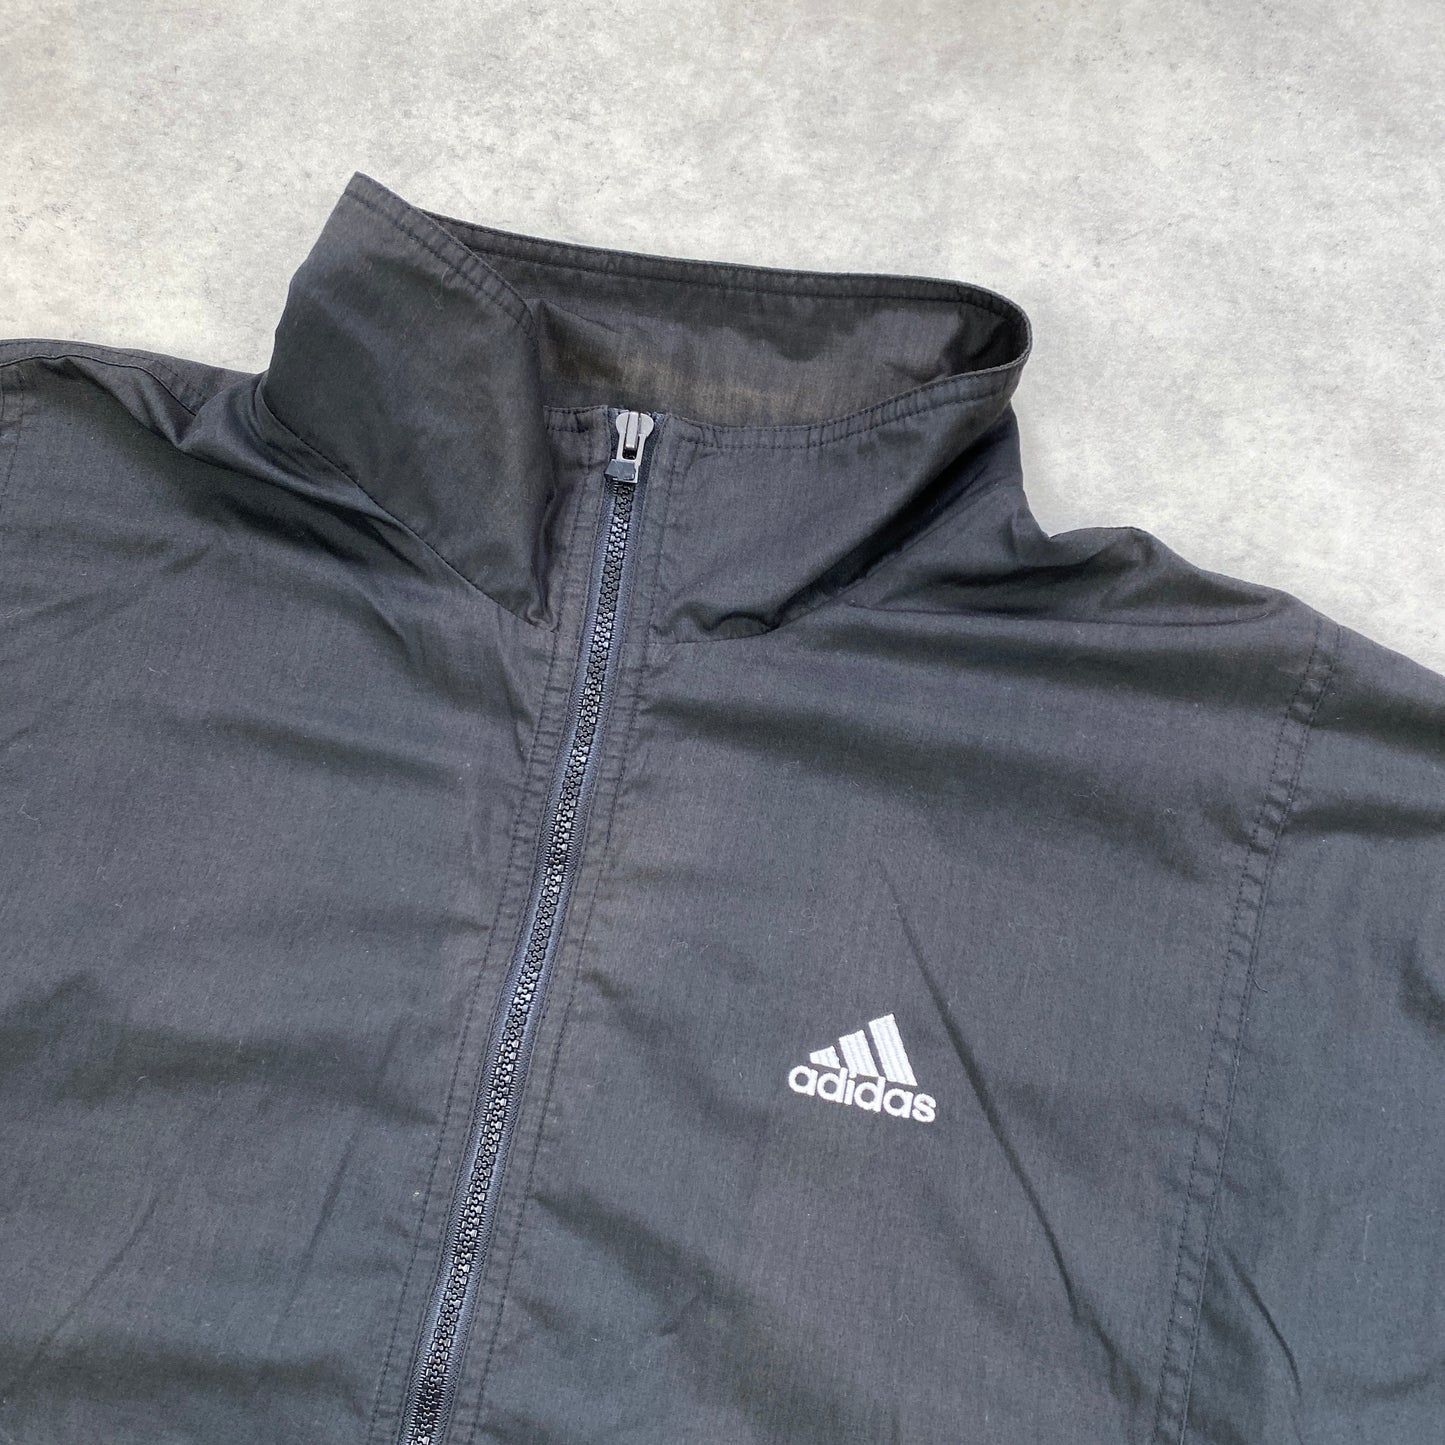 Adidas track jacket (L-XL)